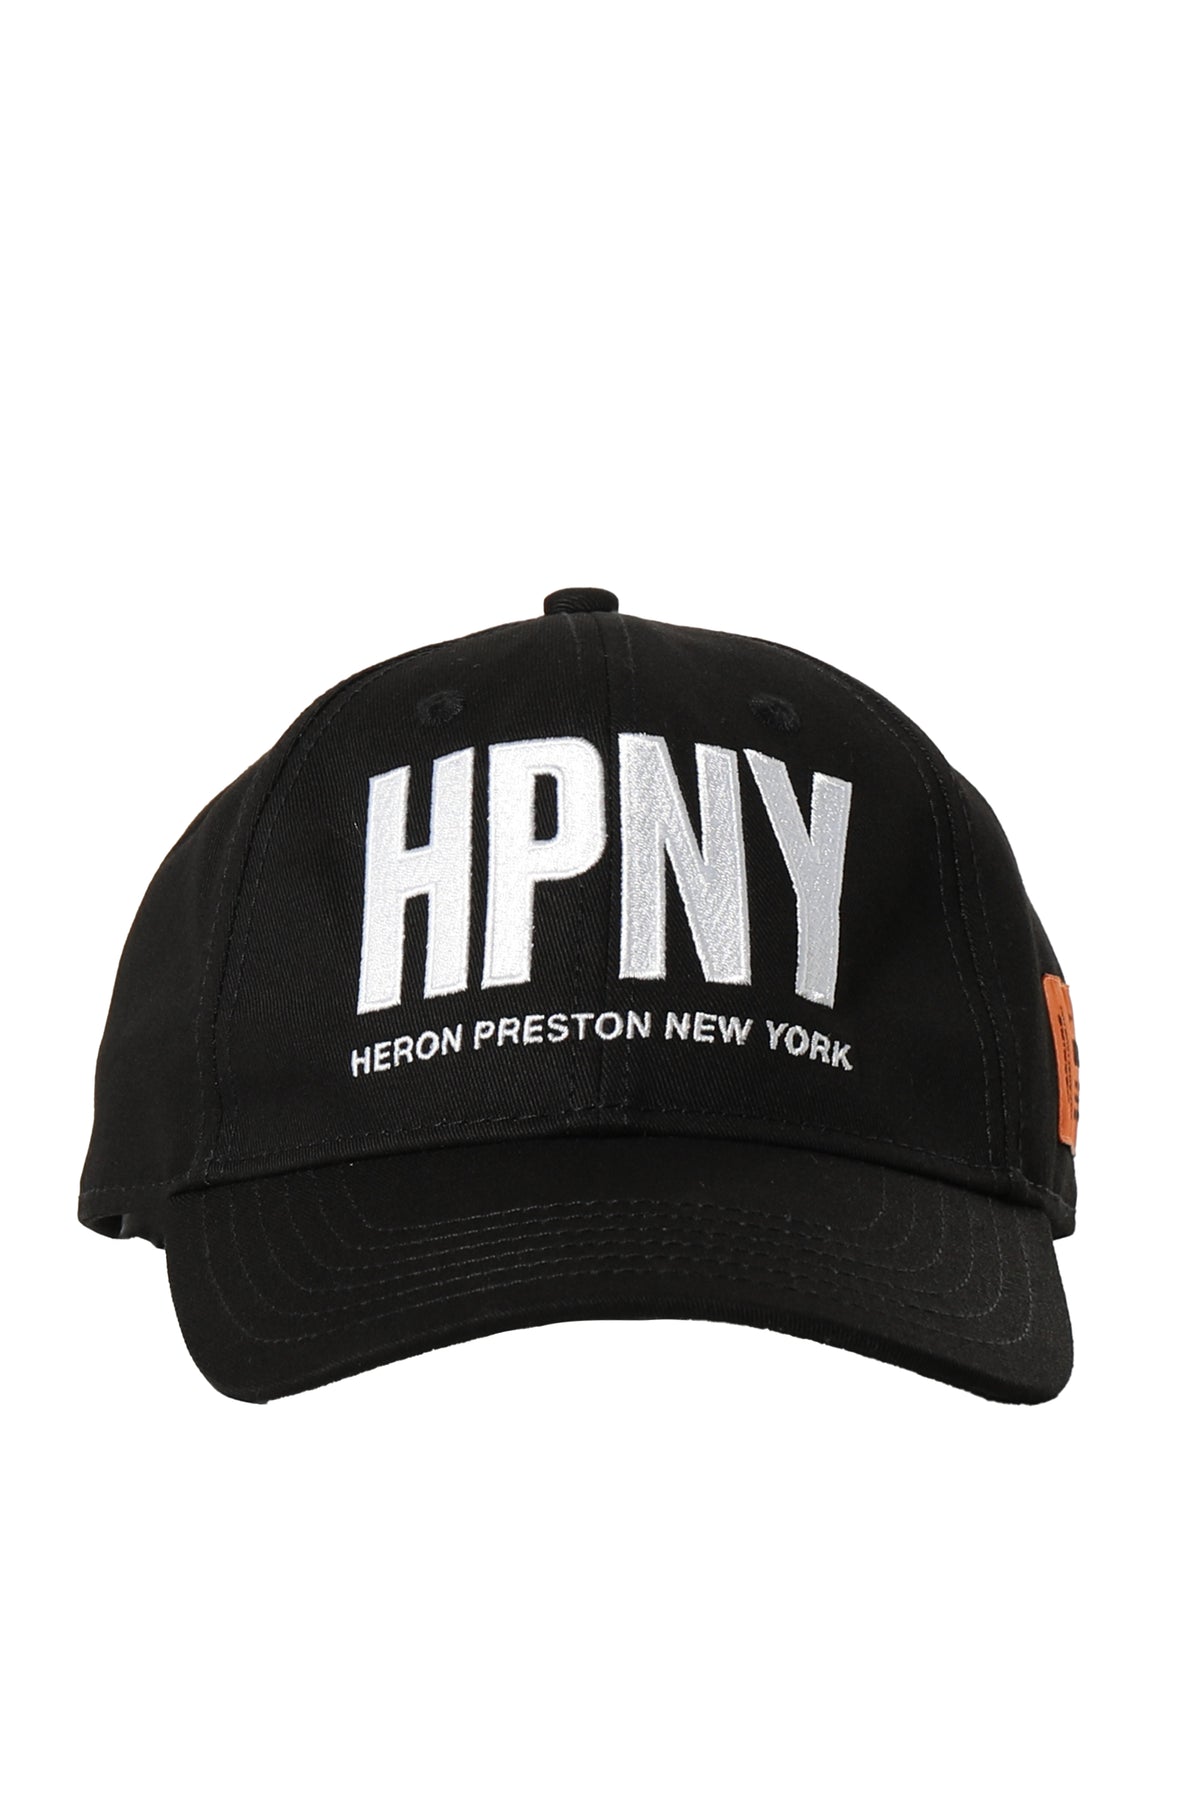 REG HPNY HAT / BLK WHT